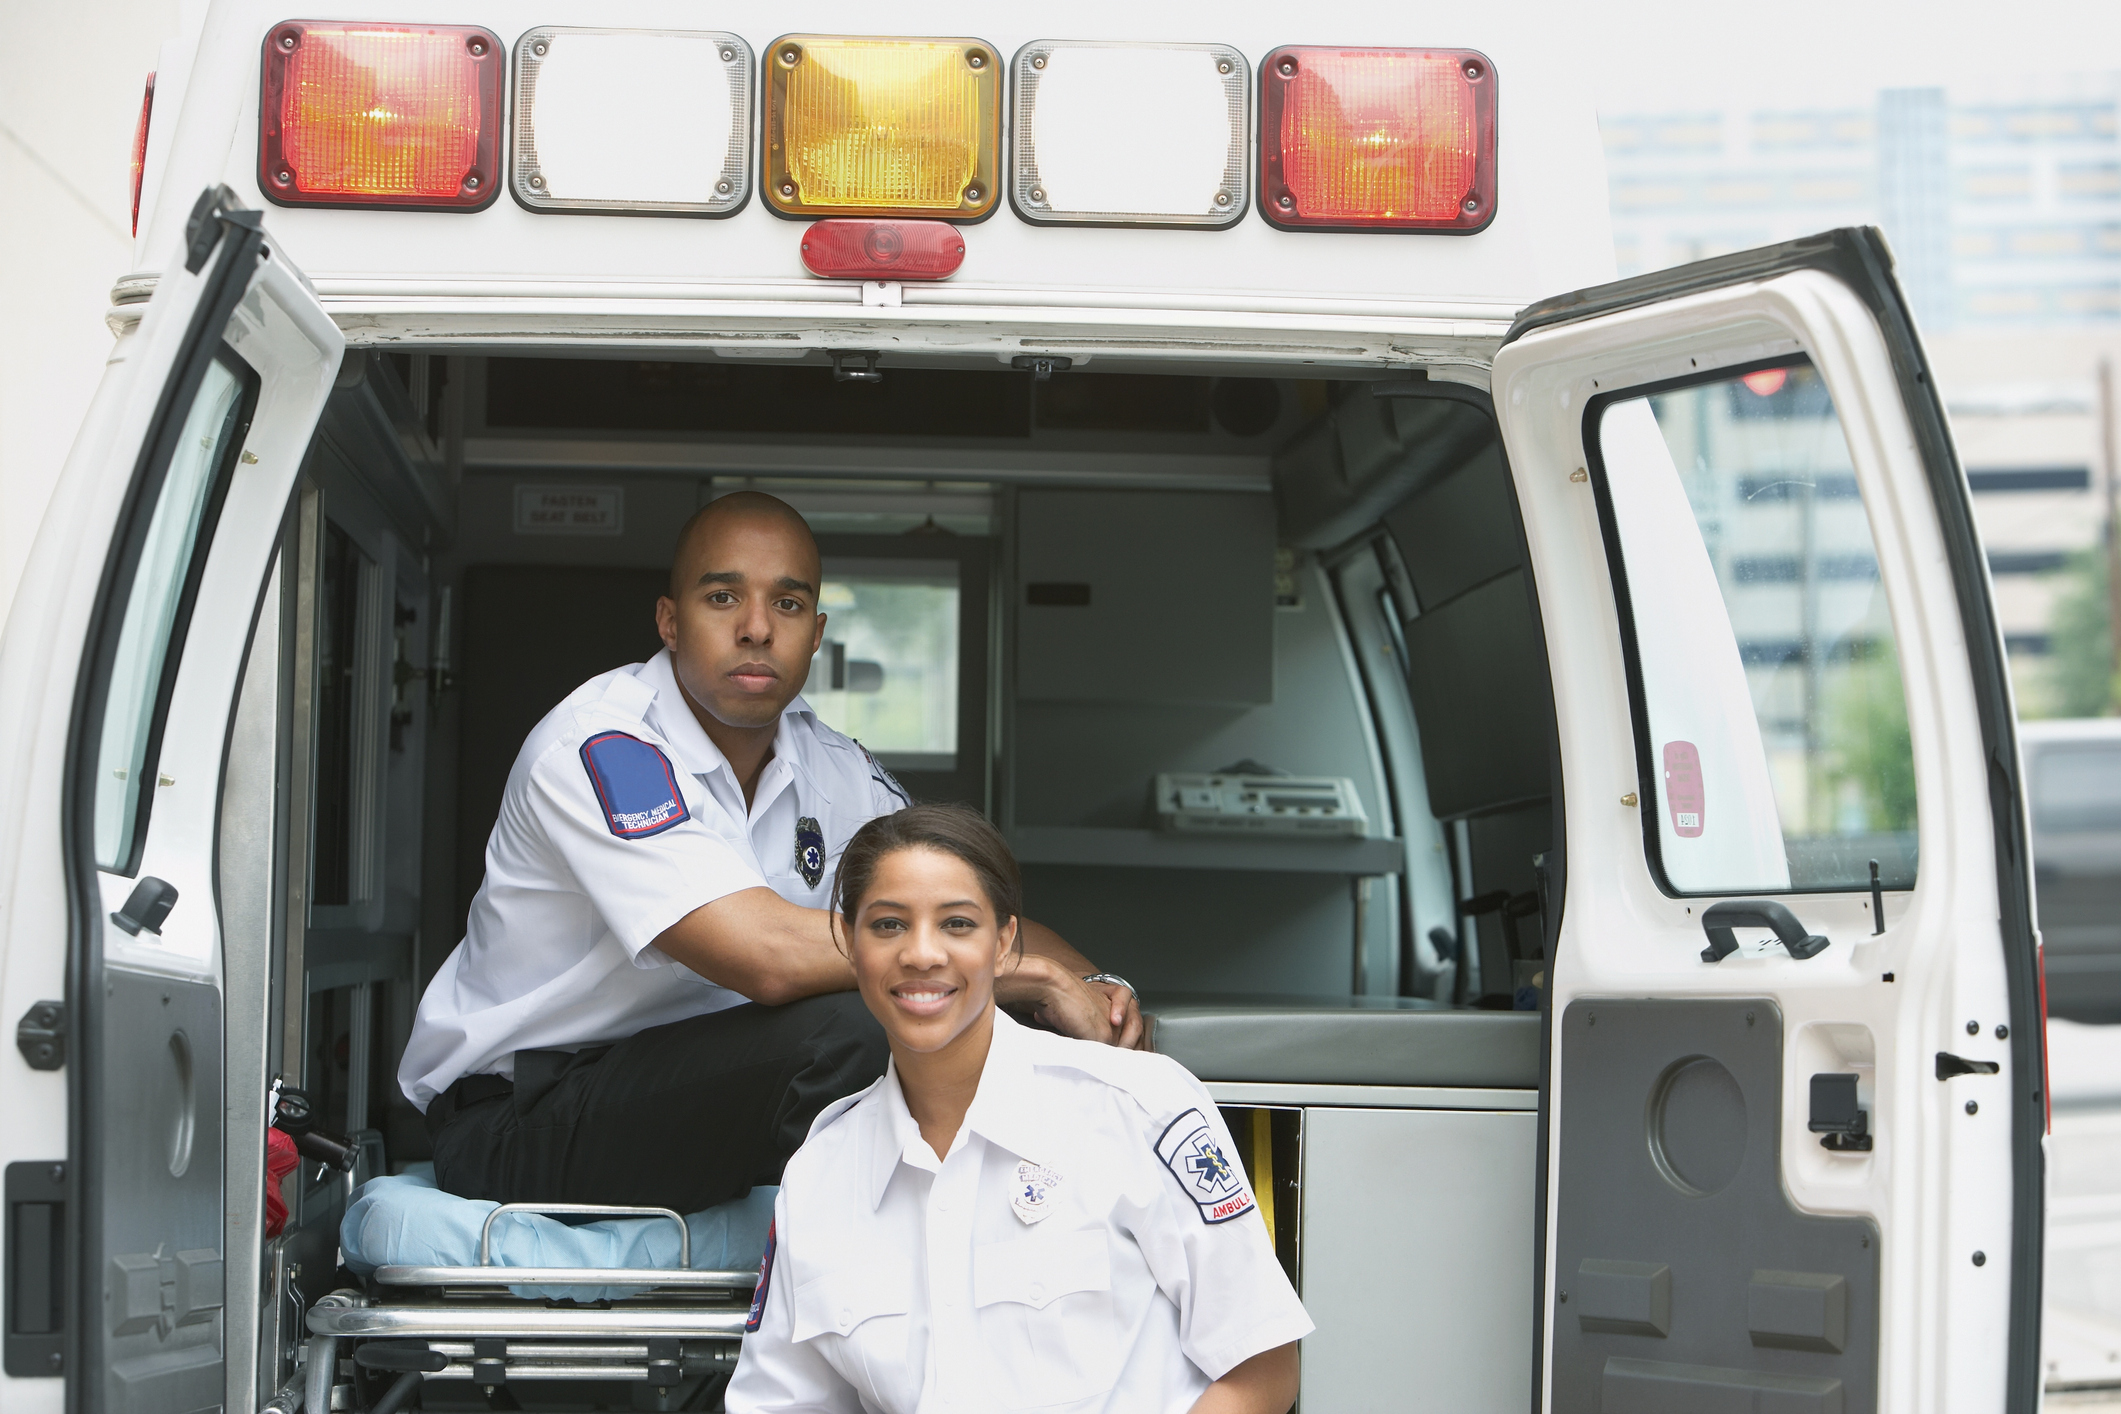 Paramedic and EMT Training Programs